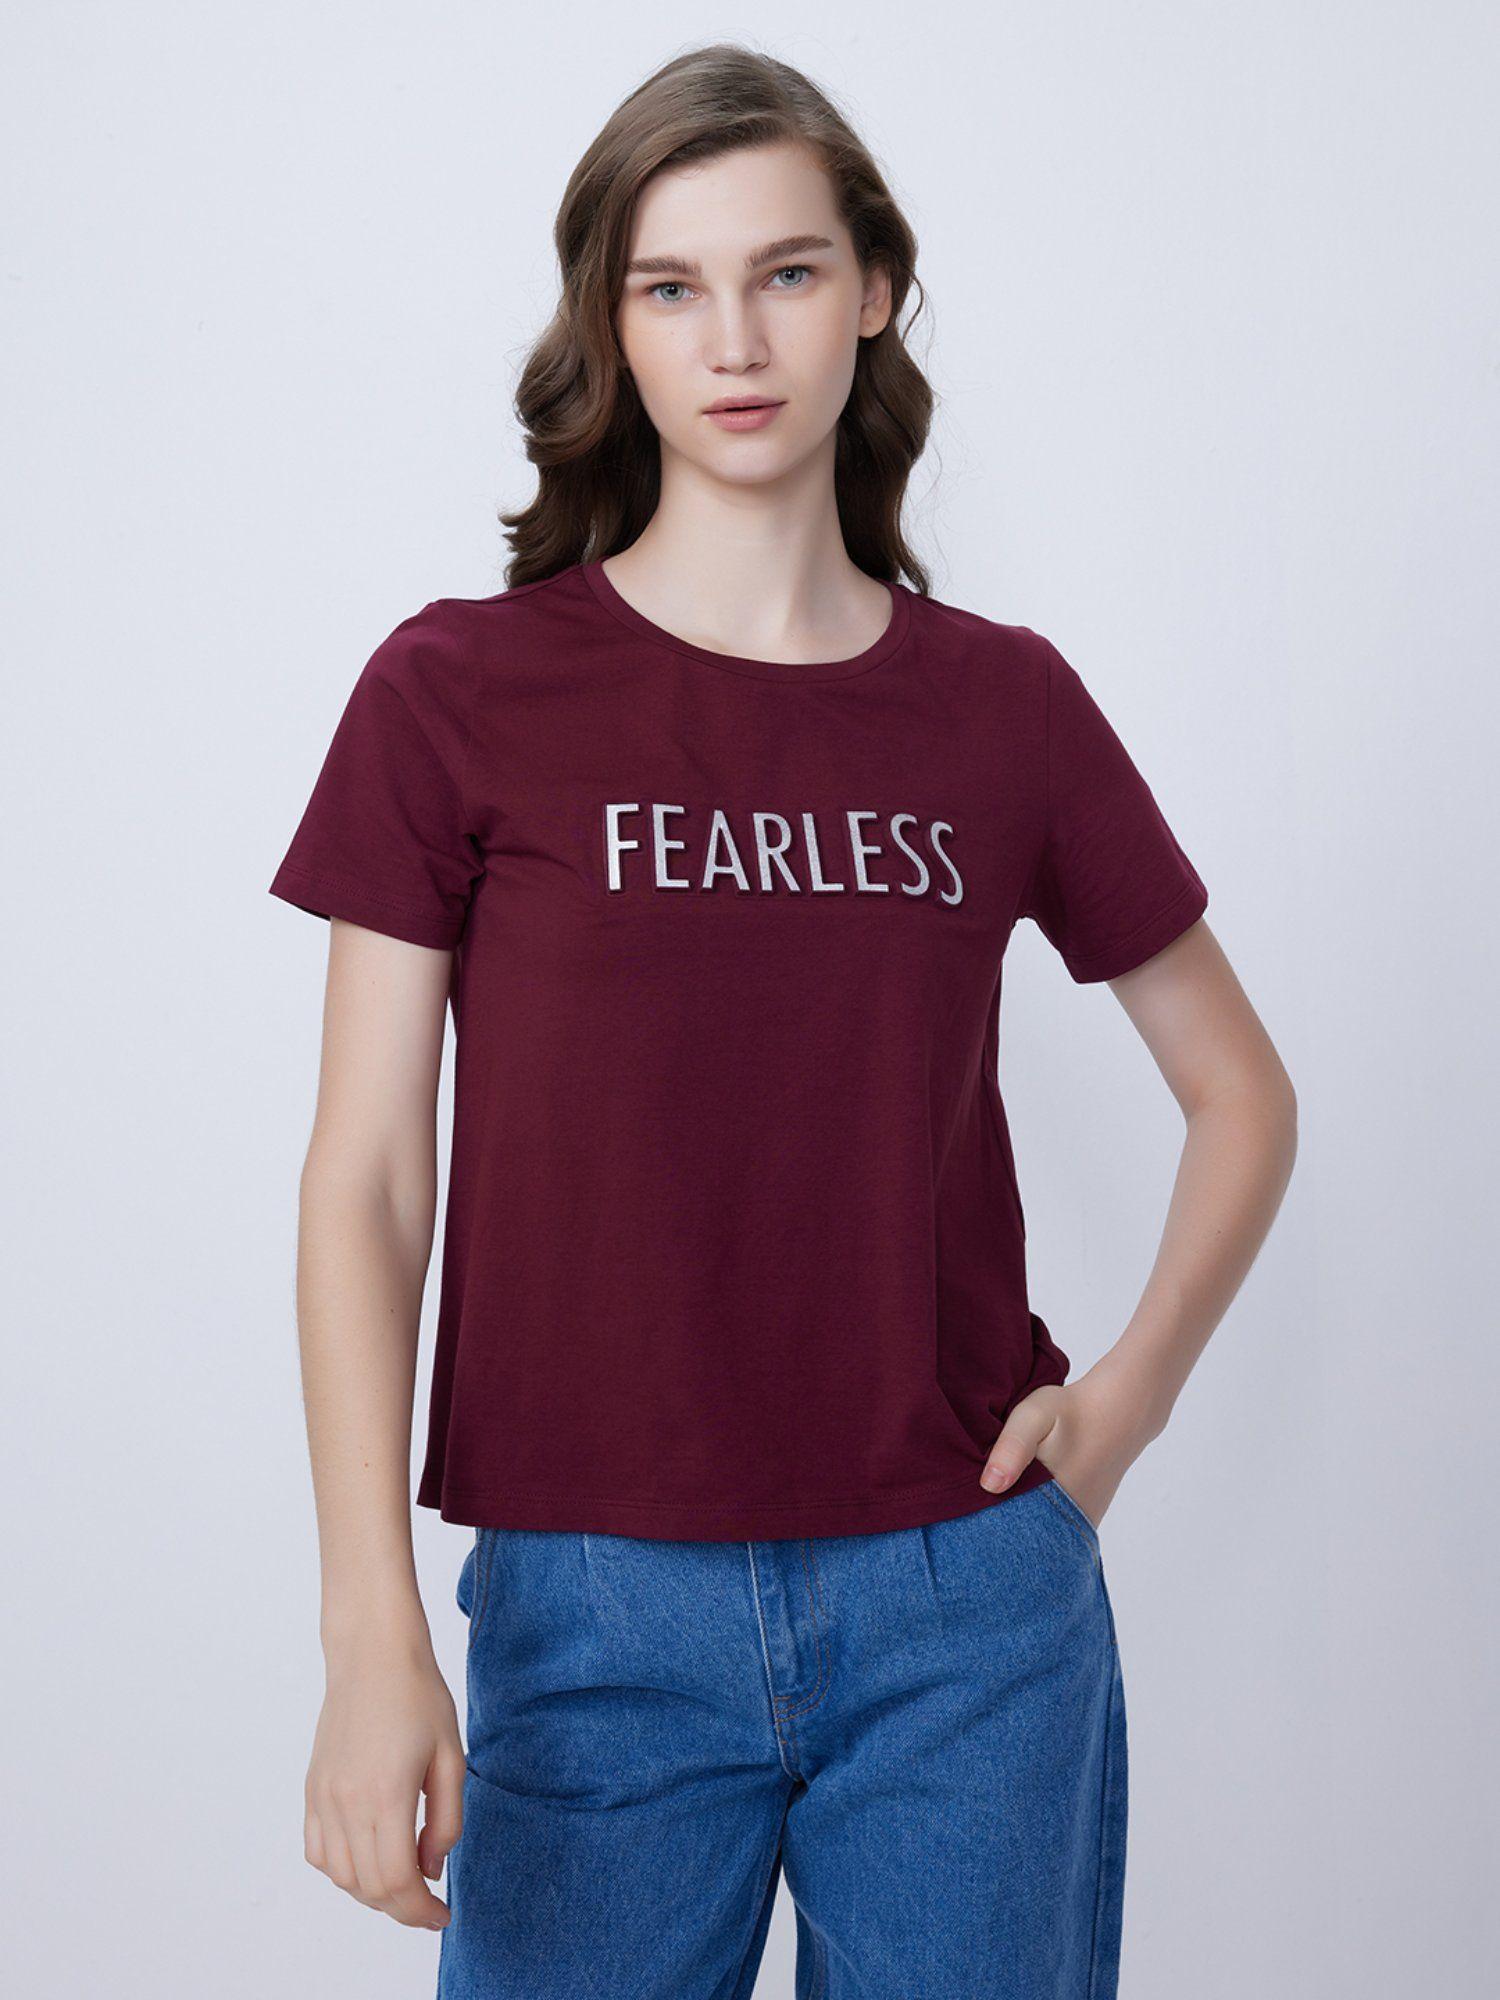 fearless wine t-shirt